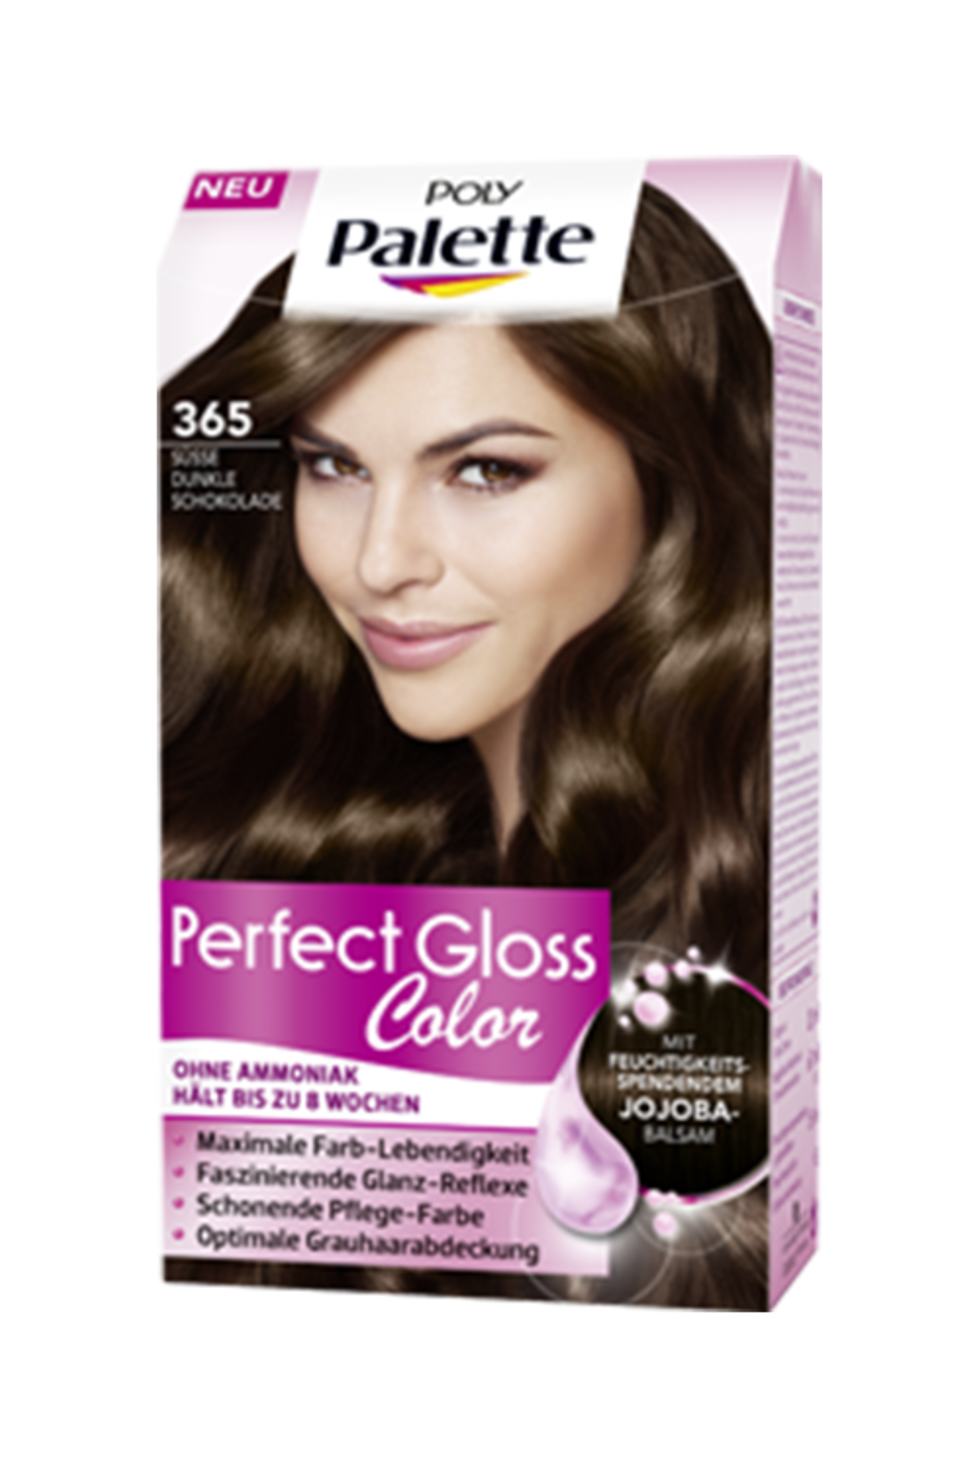 Poly Palette Perfect Gloss 365 Süsse Dunkle Schokolade